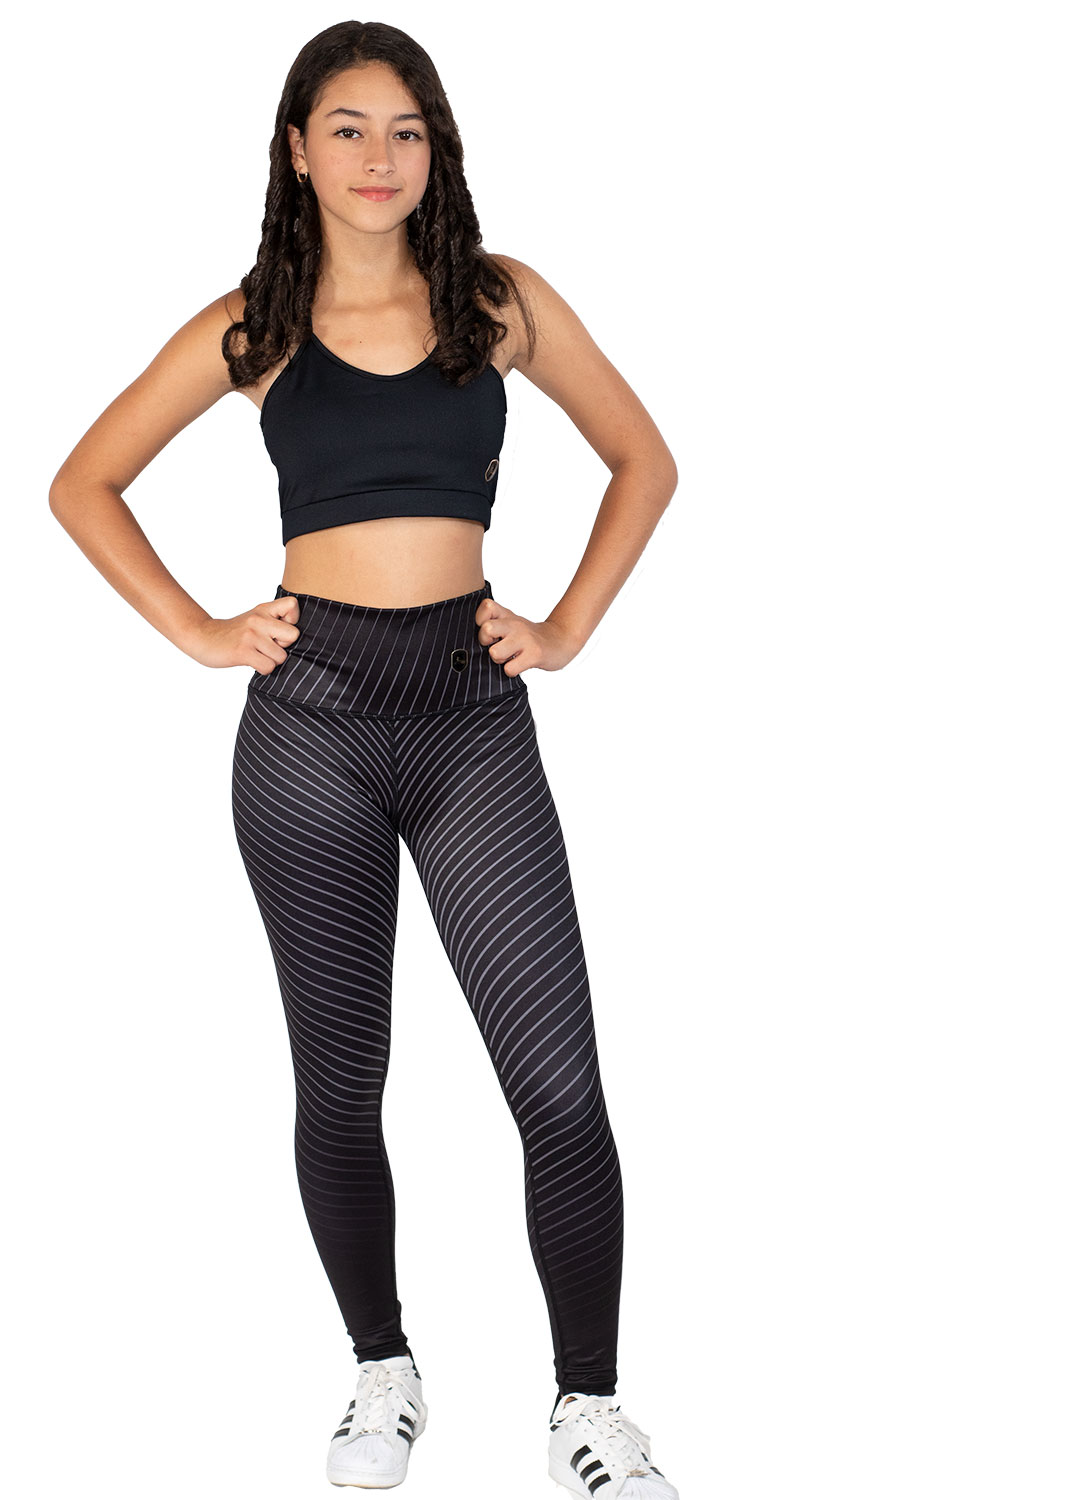 https://envigadomalldigital.com.co/wp-content/uploads/2022/10/pantalon-negro-deportivo-leggins-mujer-1-estilo-fitness-MA.jpg